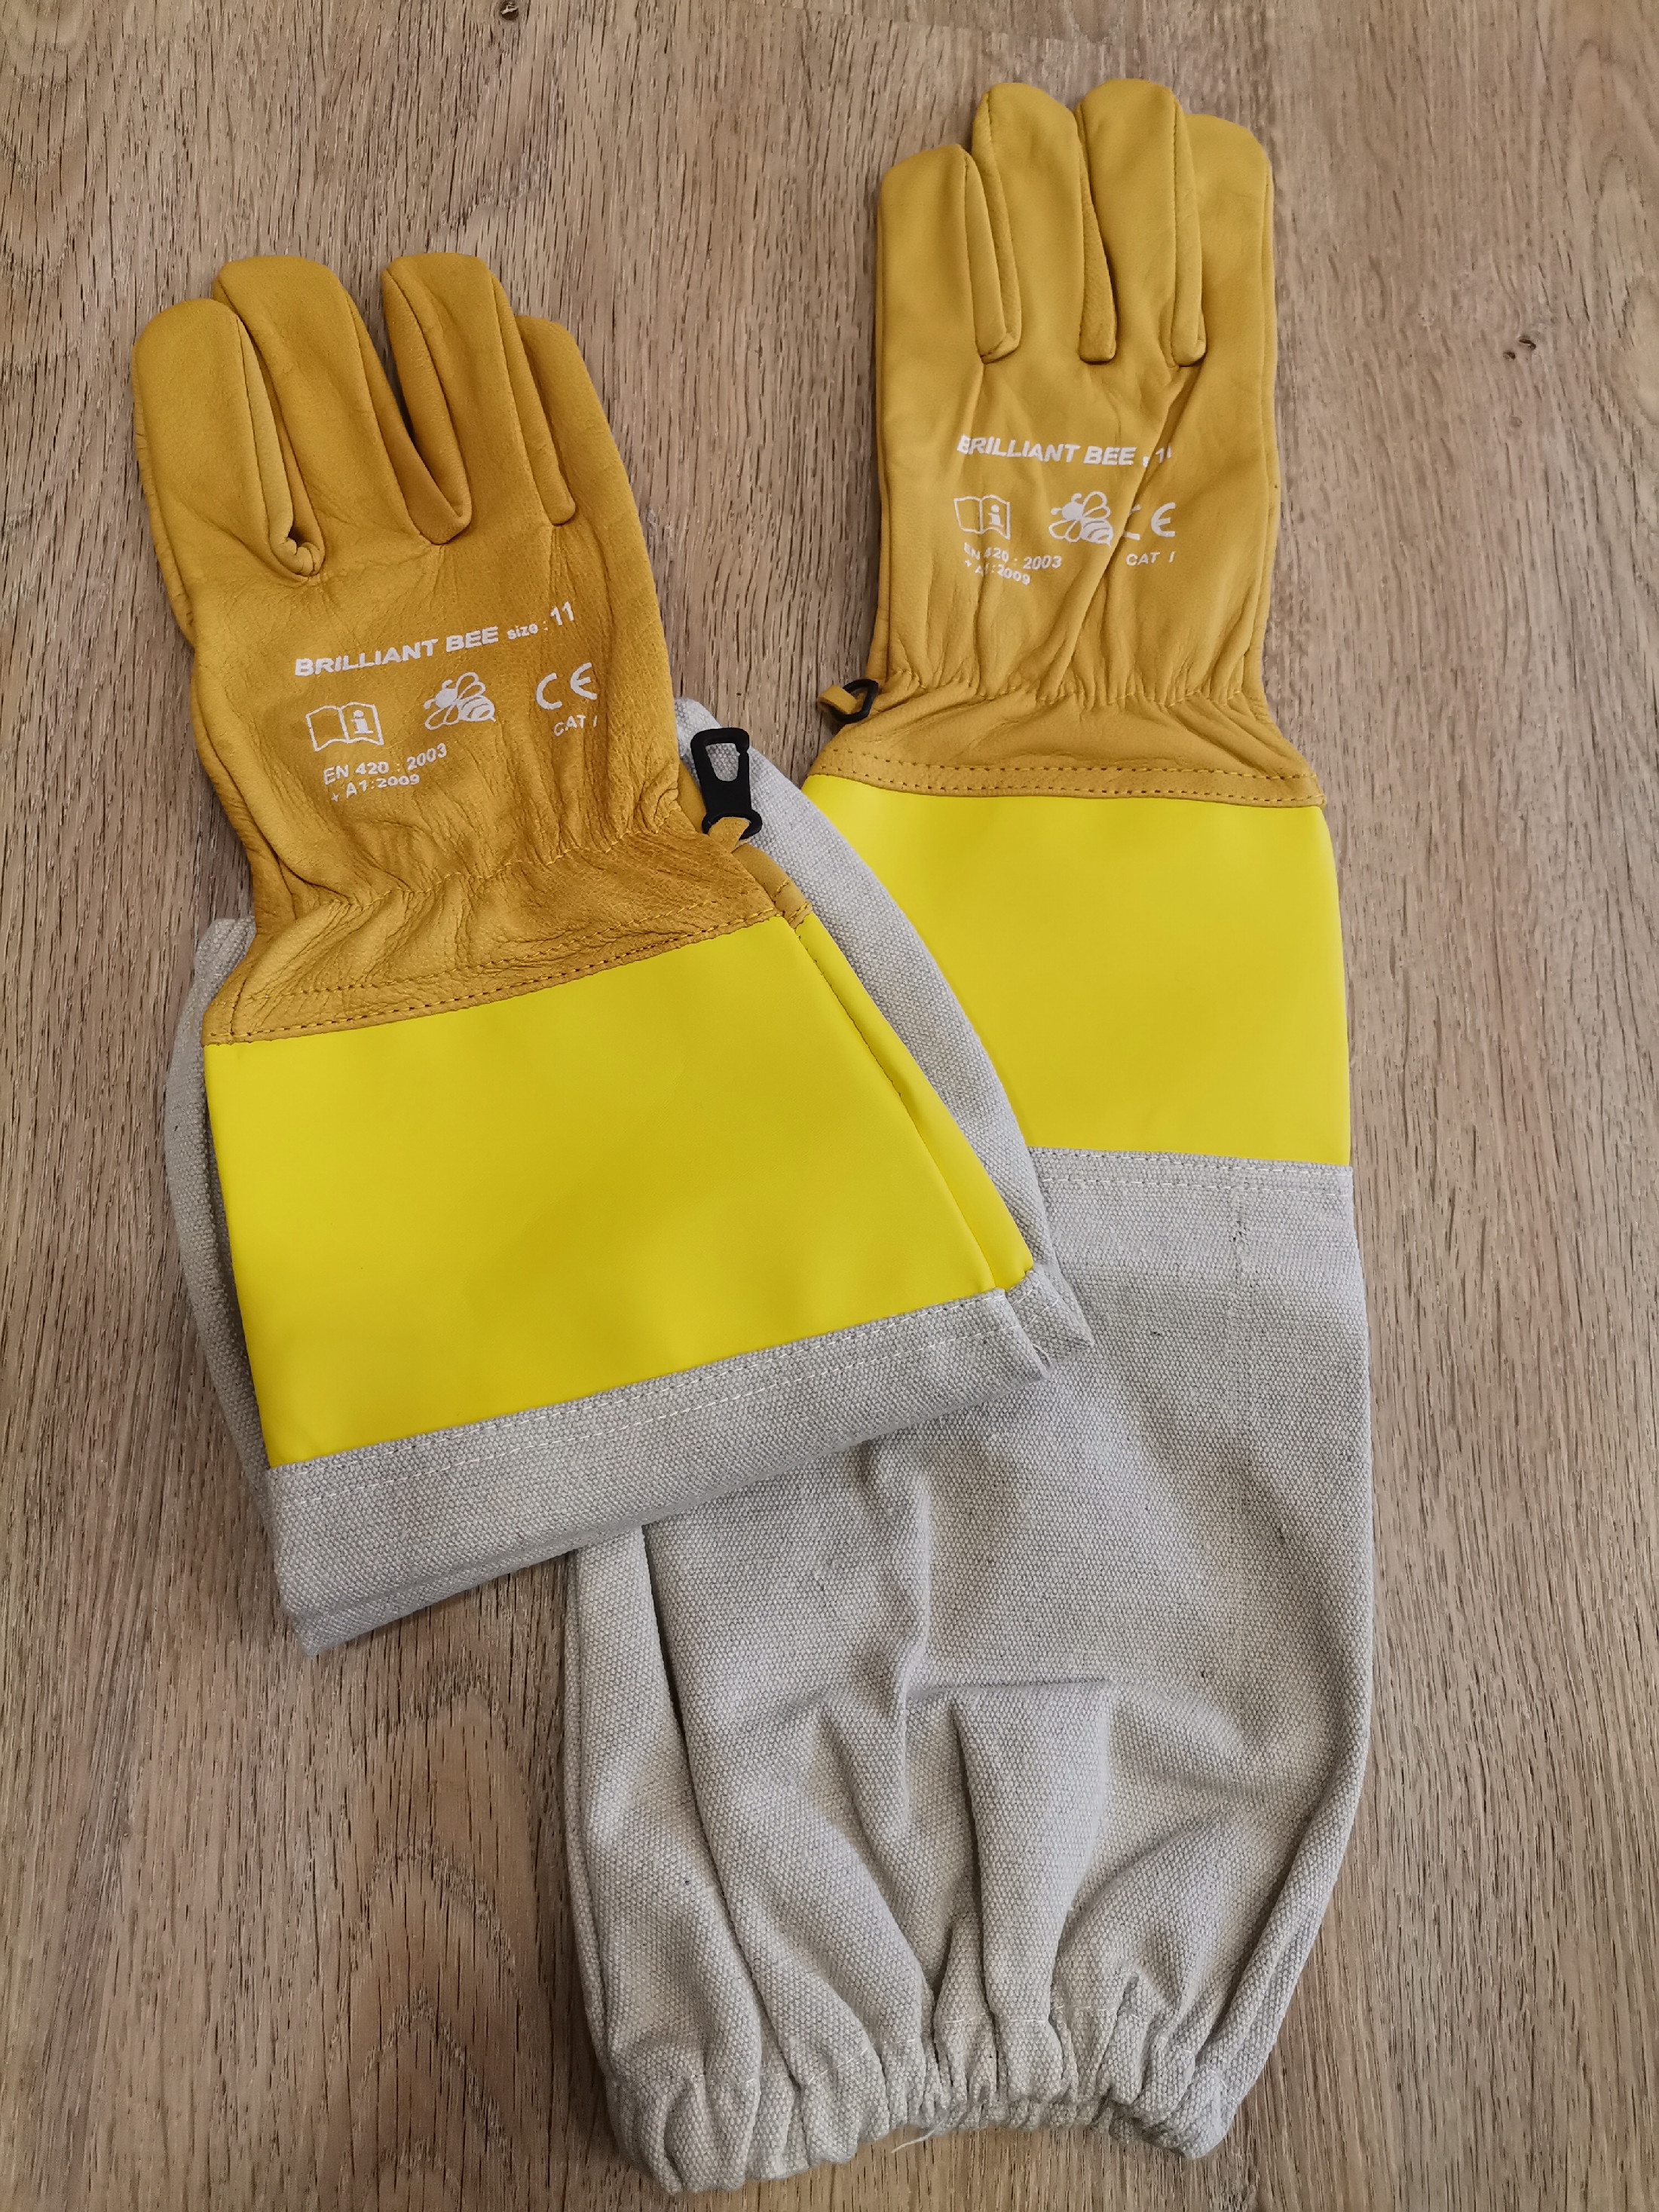 Včelařské rukavice deluxe - žluté, velikost 12